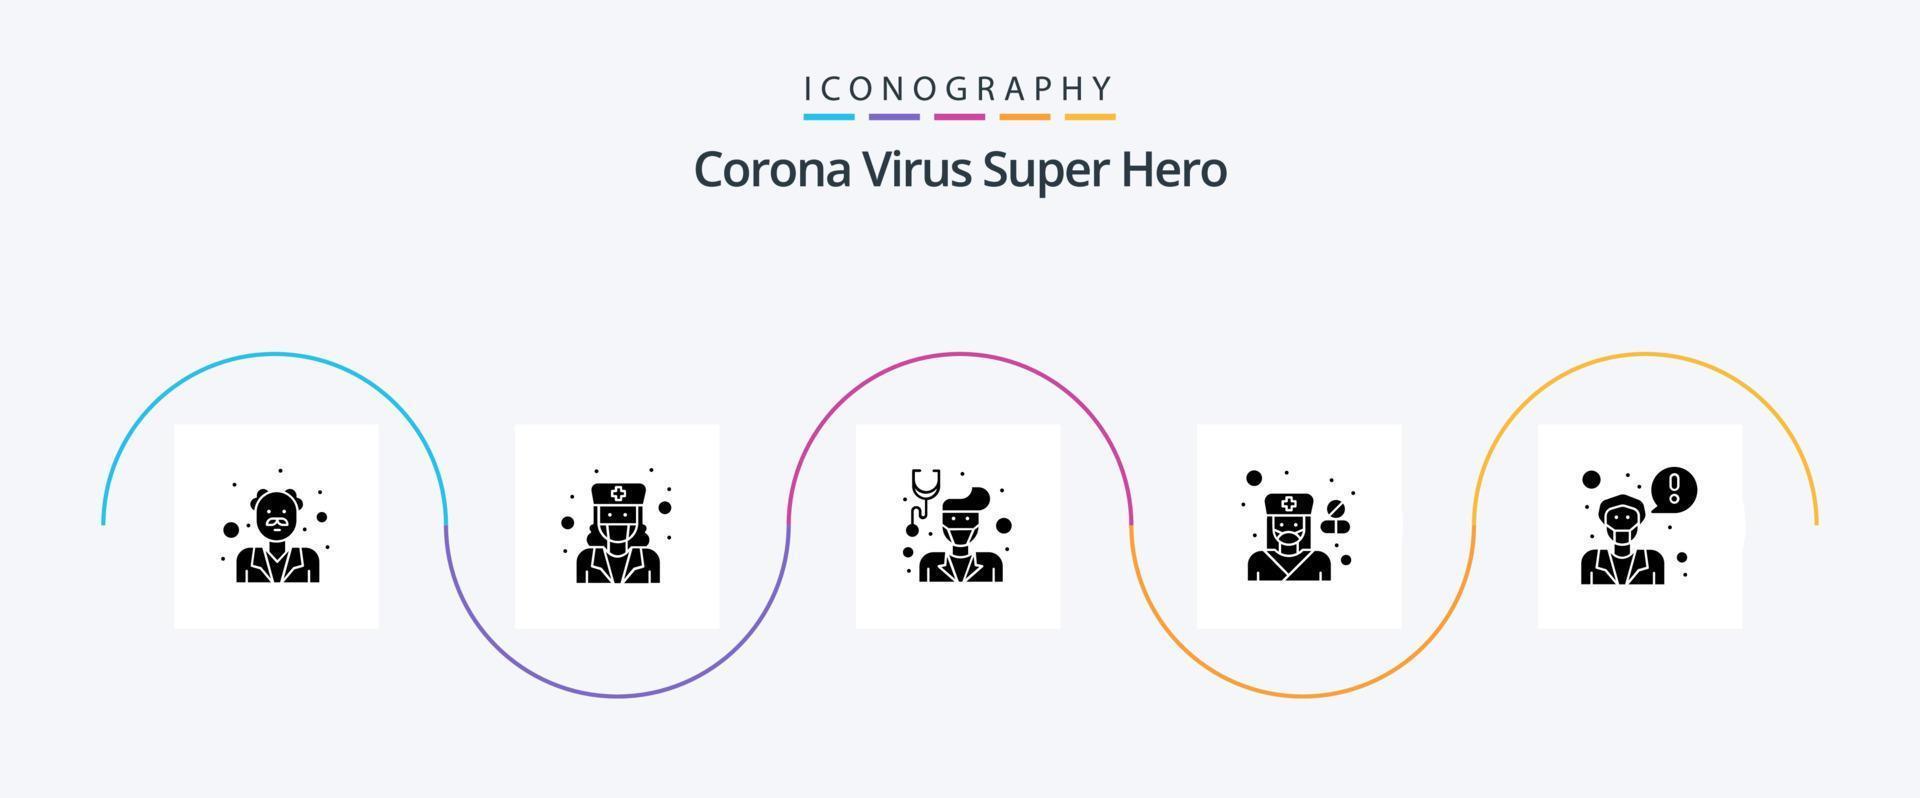 corona virus súper héroe glifo 5 5 icono paquete incluso pedir un doctor. farmacéutico. masculino. hospital. hembra vector